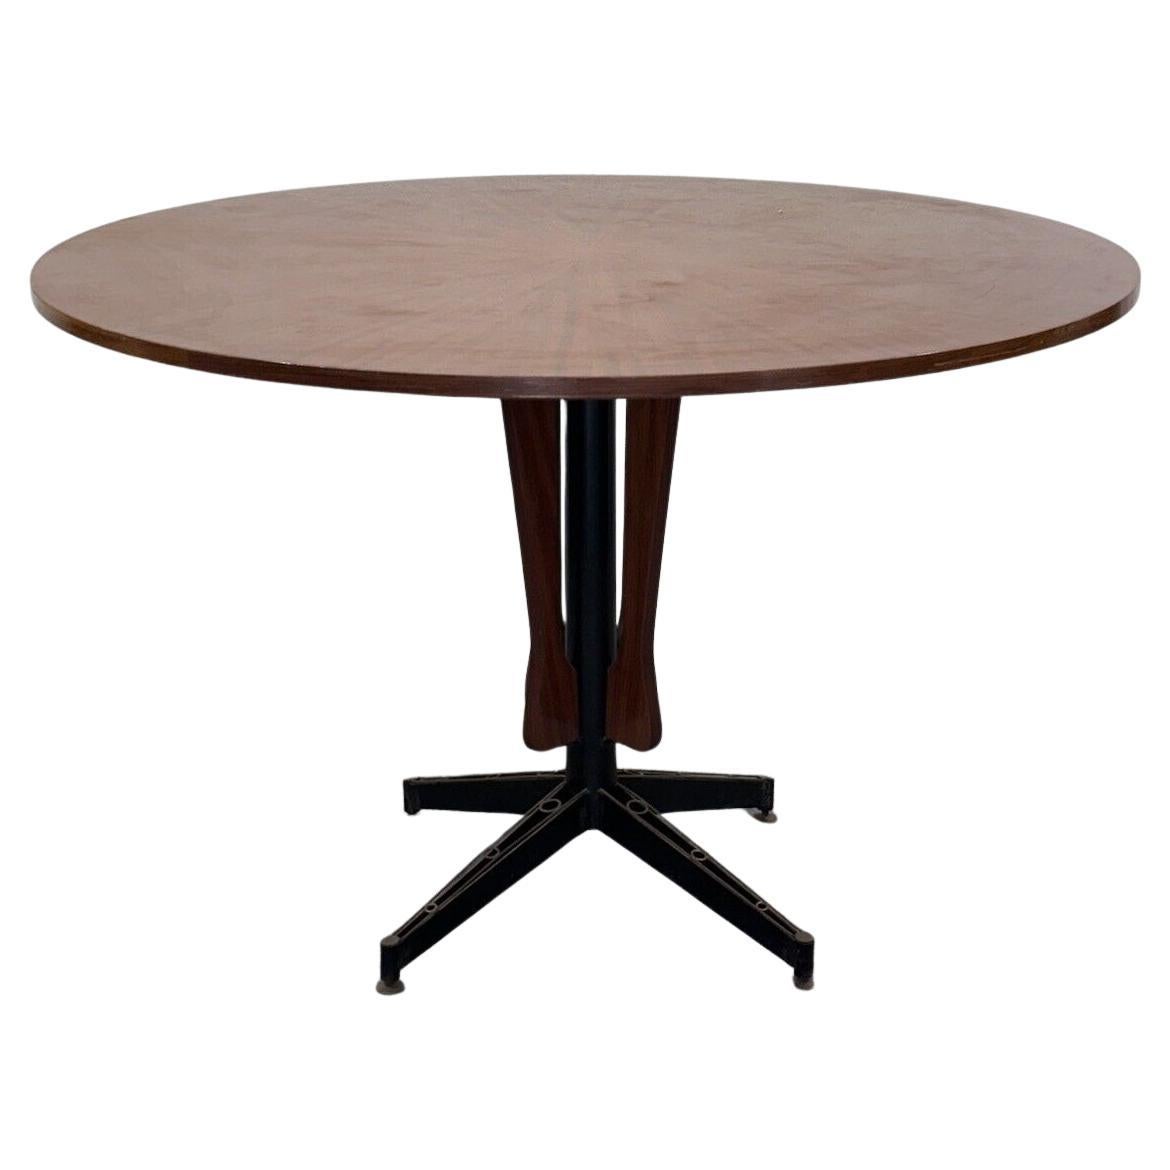 Carlo Ratti Lulli Dining Table 1960s Modern Design